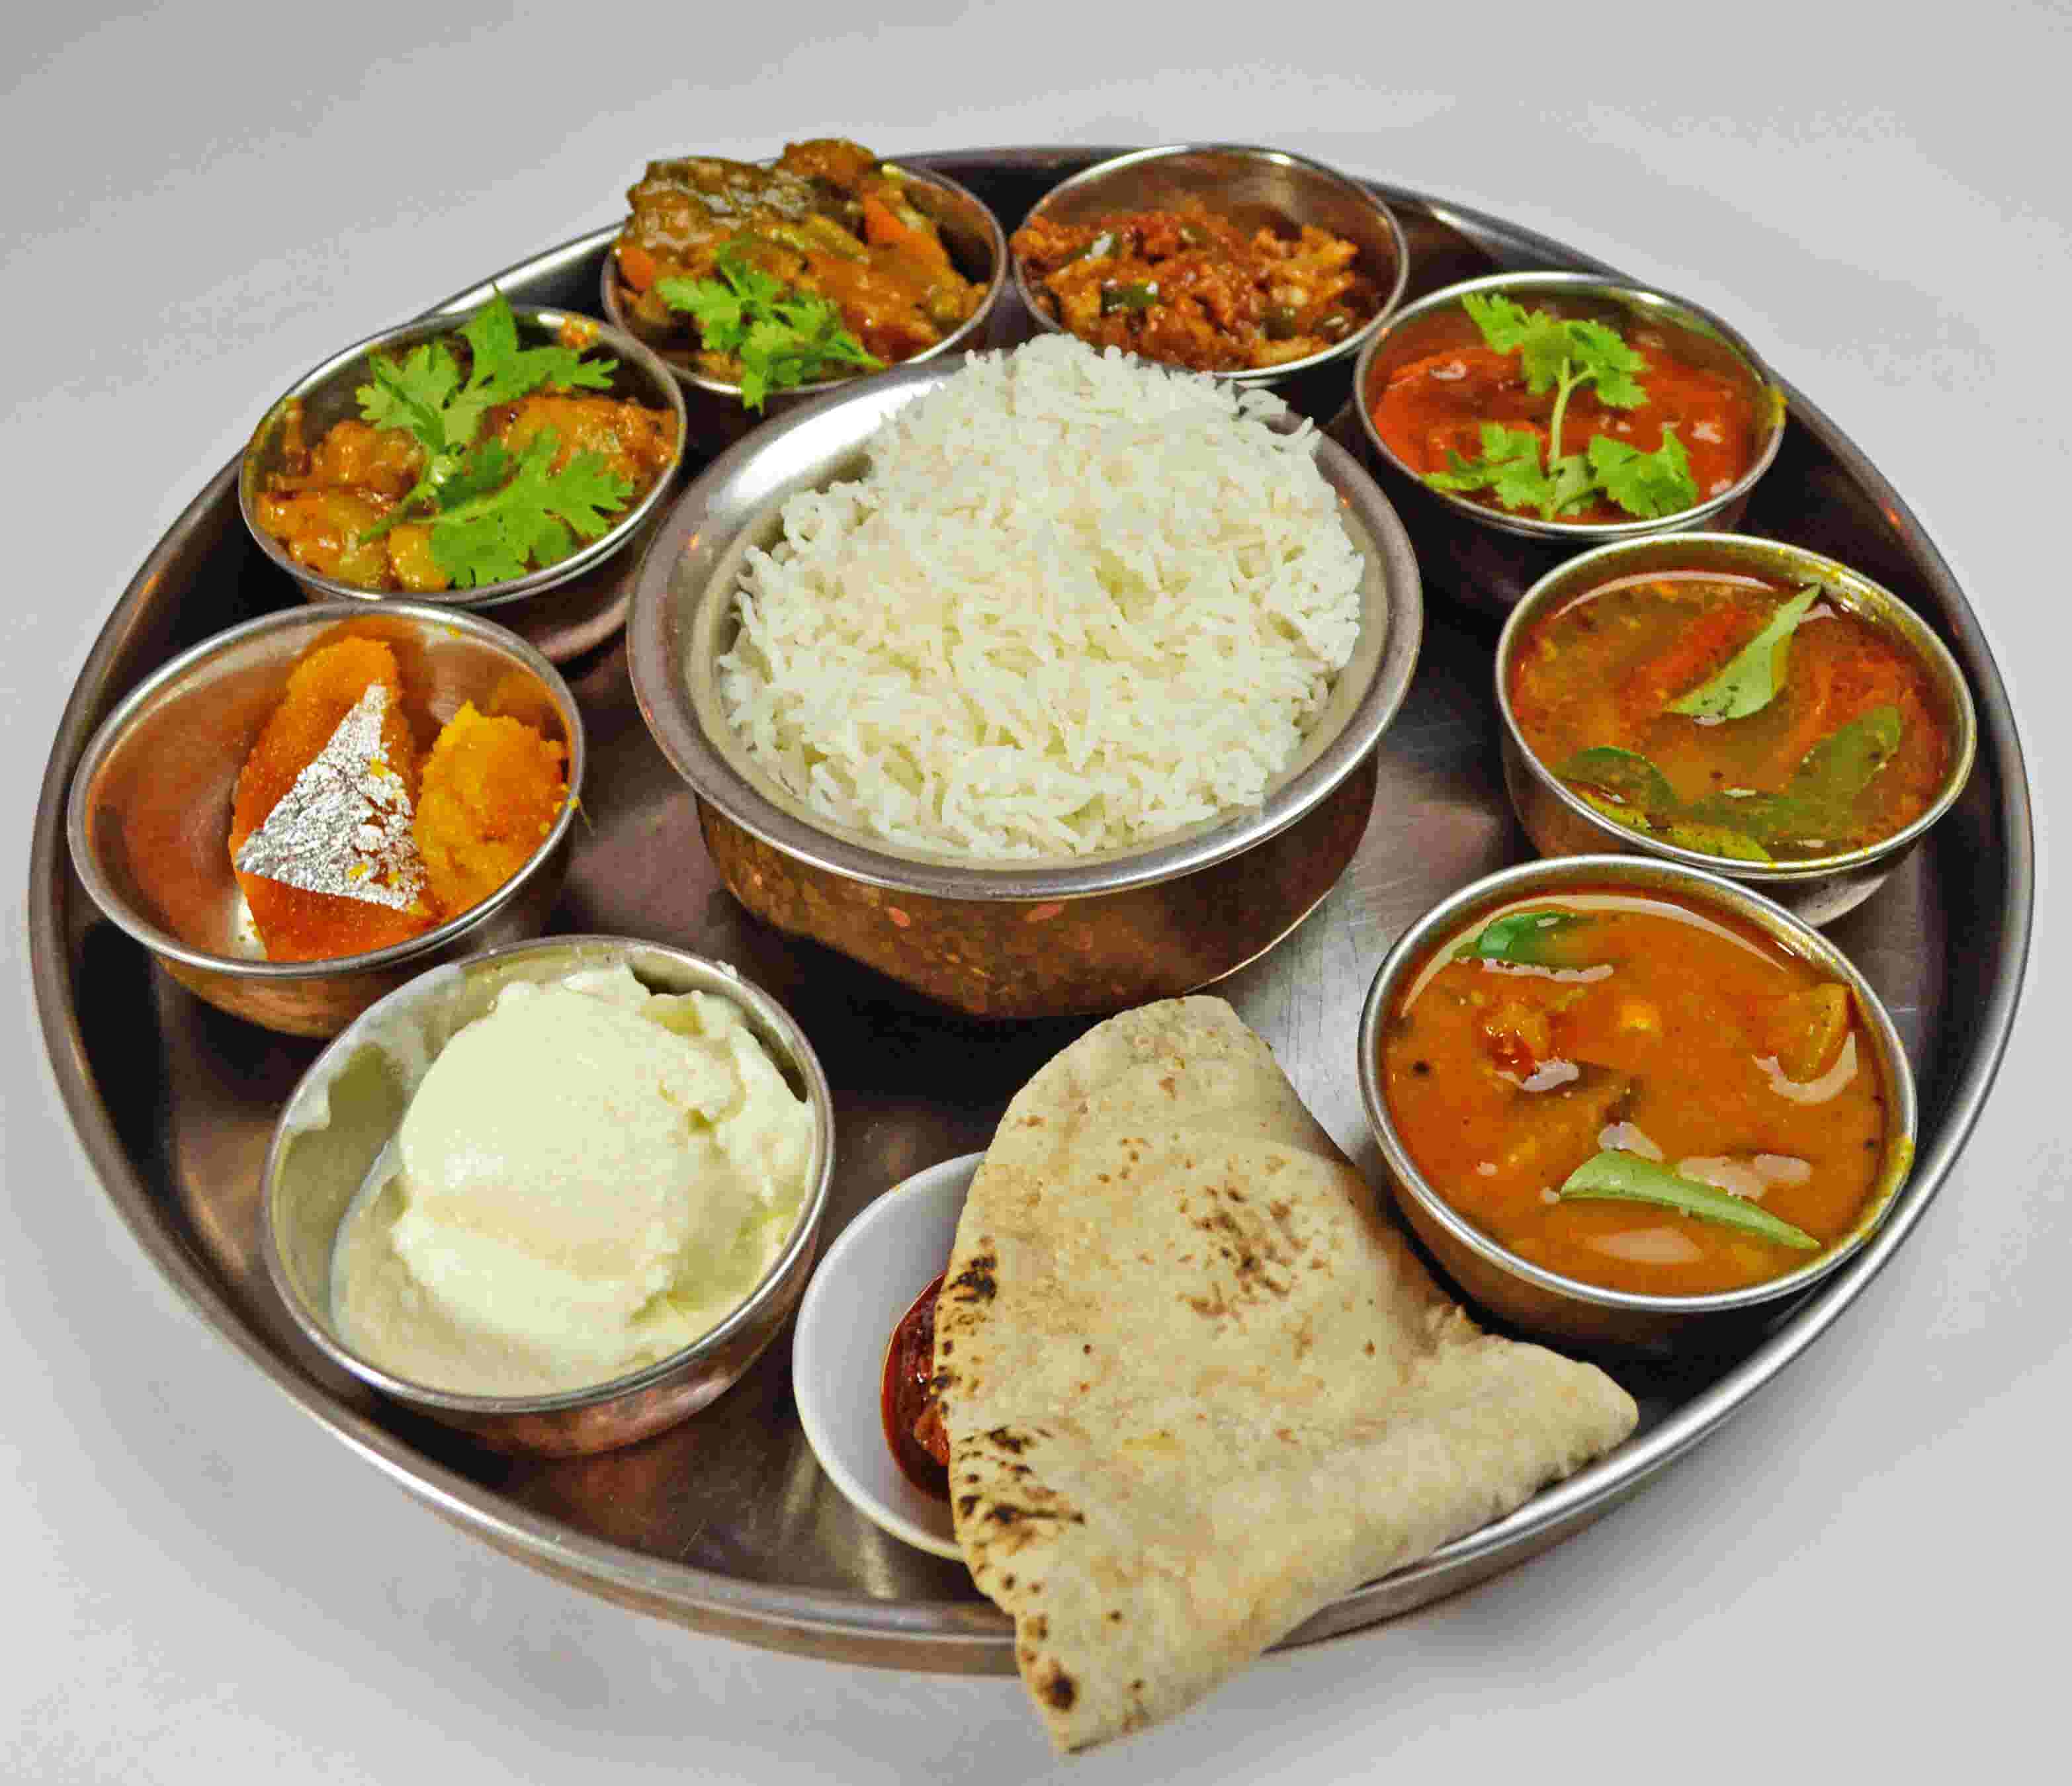 Halal food at Taste of India Restaurant